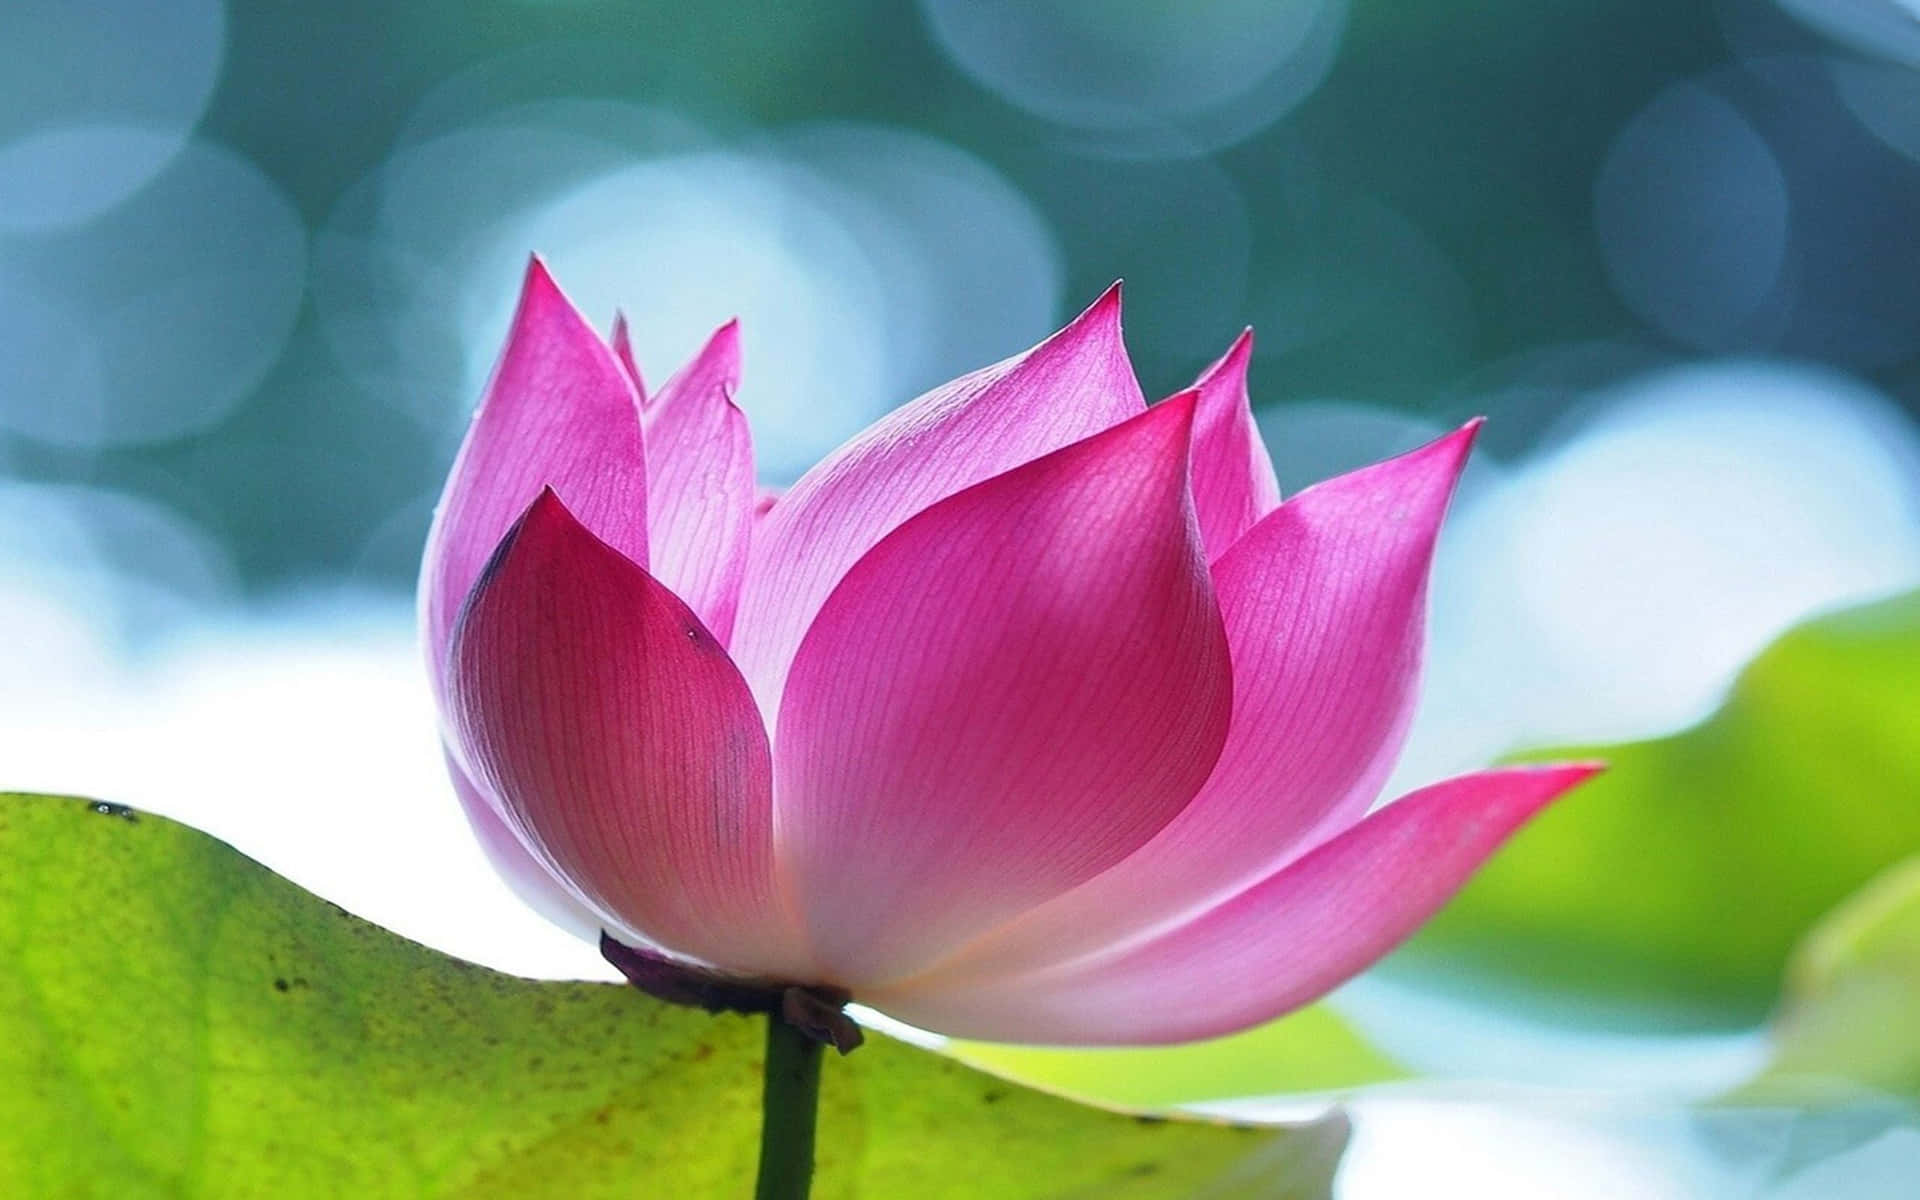 The beautiful lotus flower